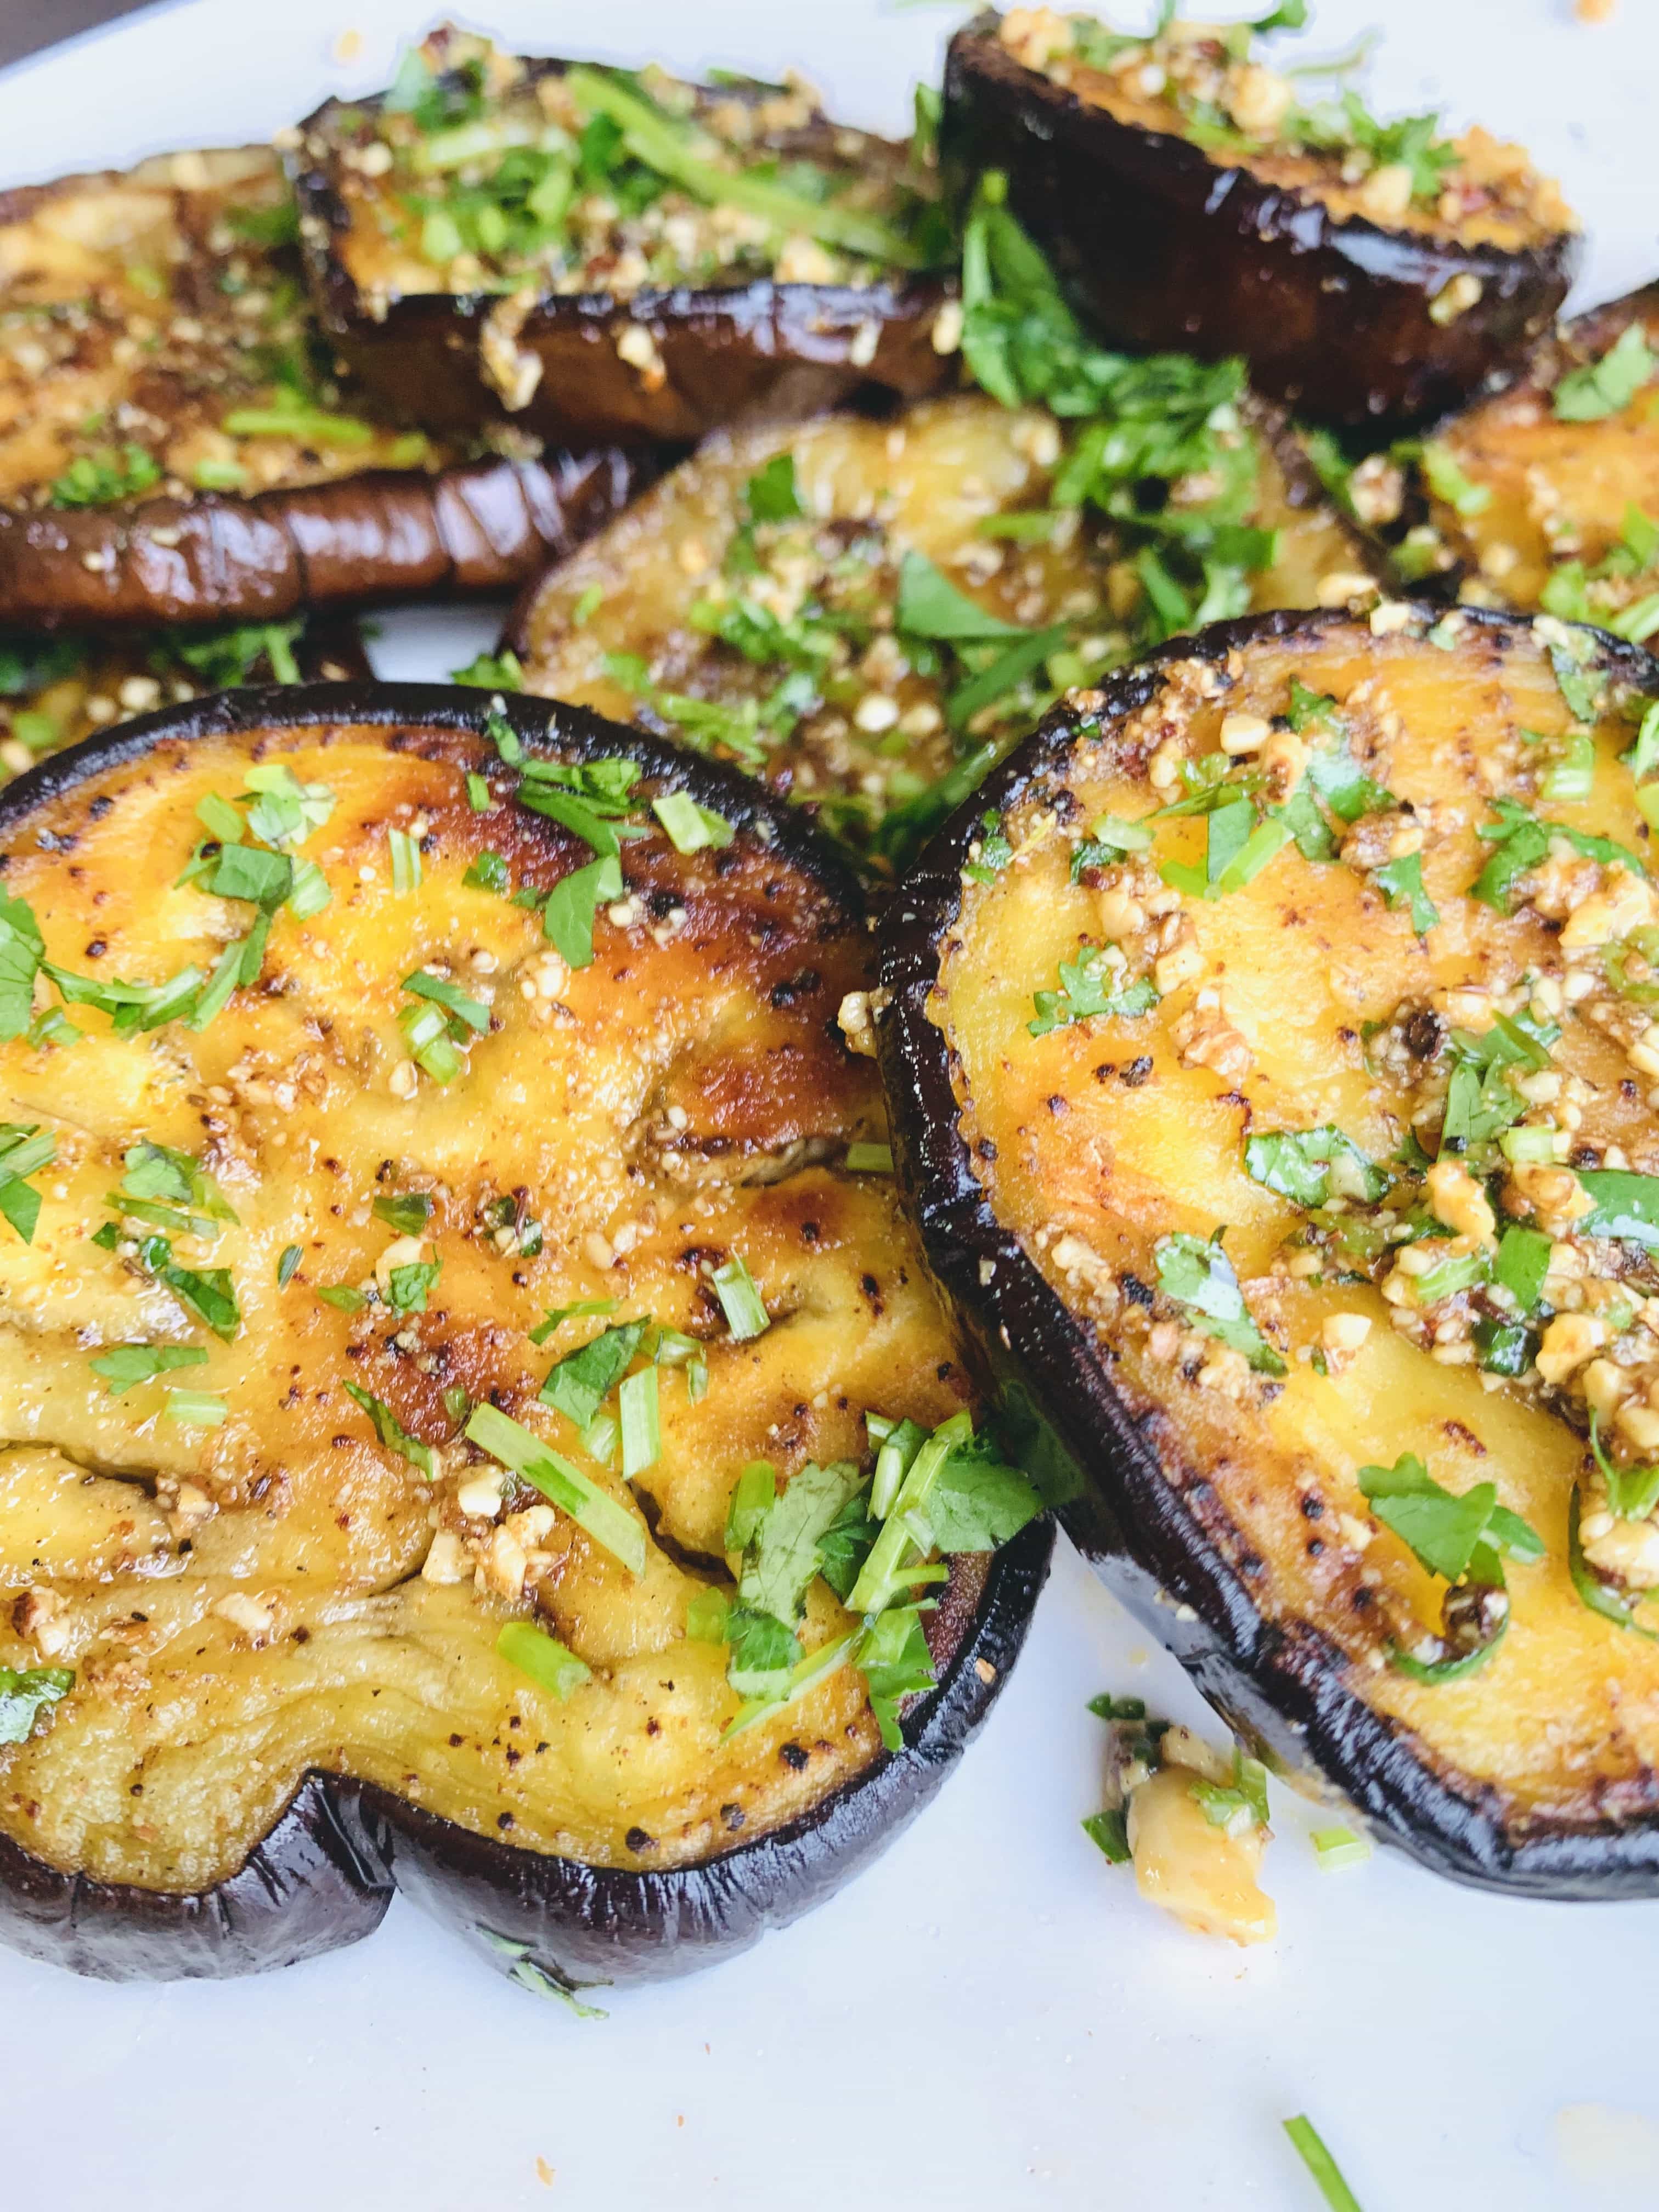 Eggplants with Goda Masala inspired sweet Spice Mix